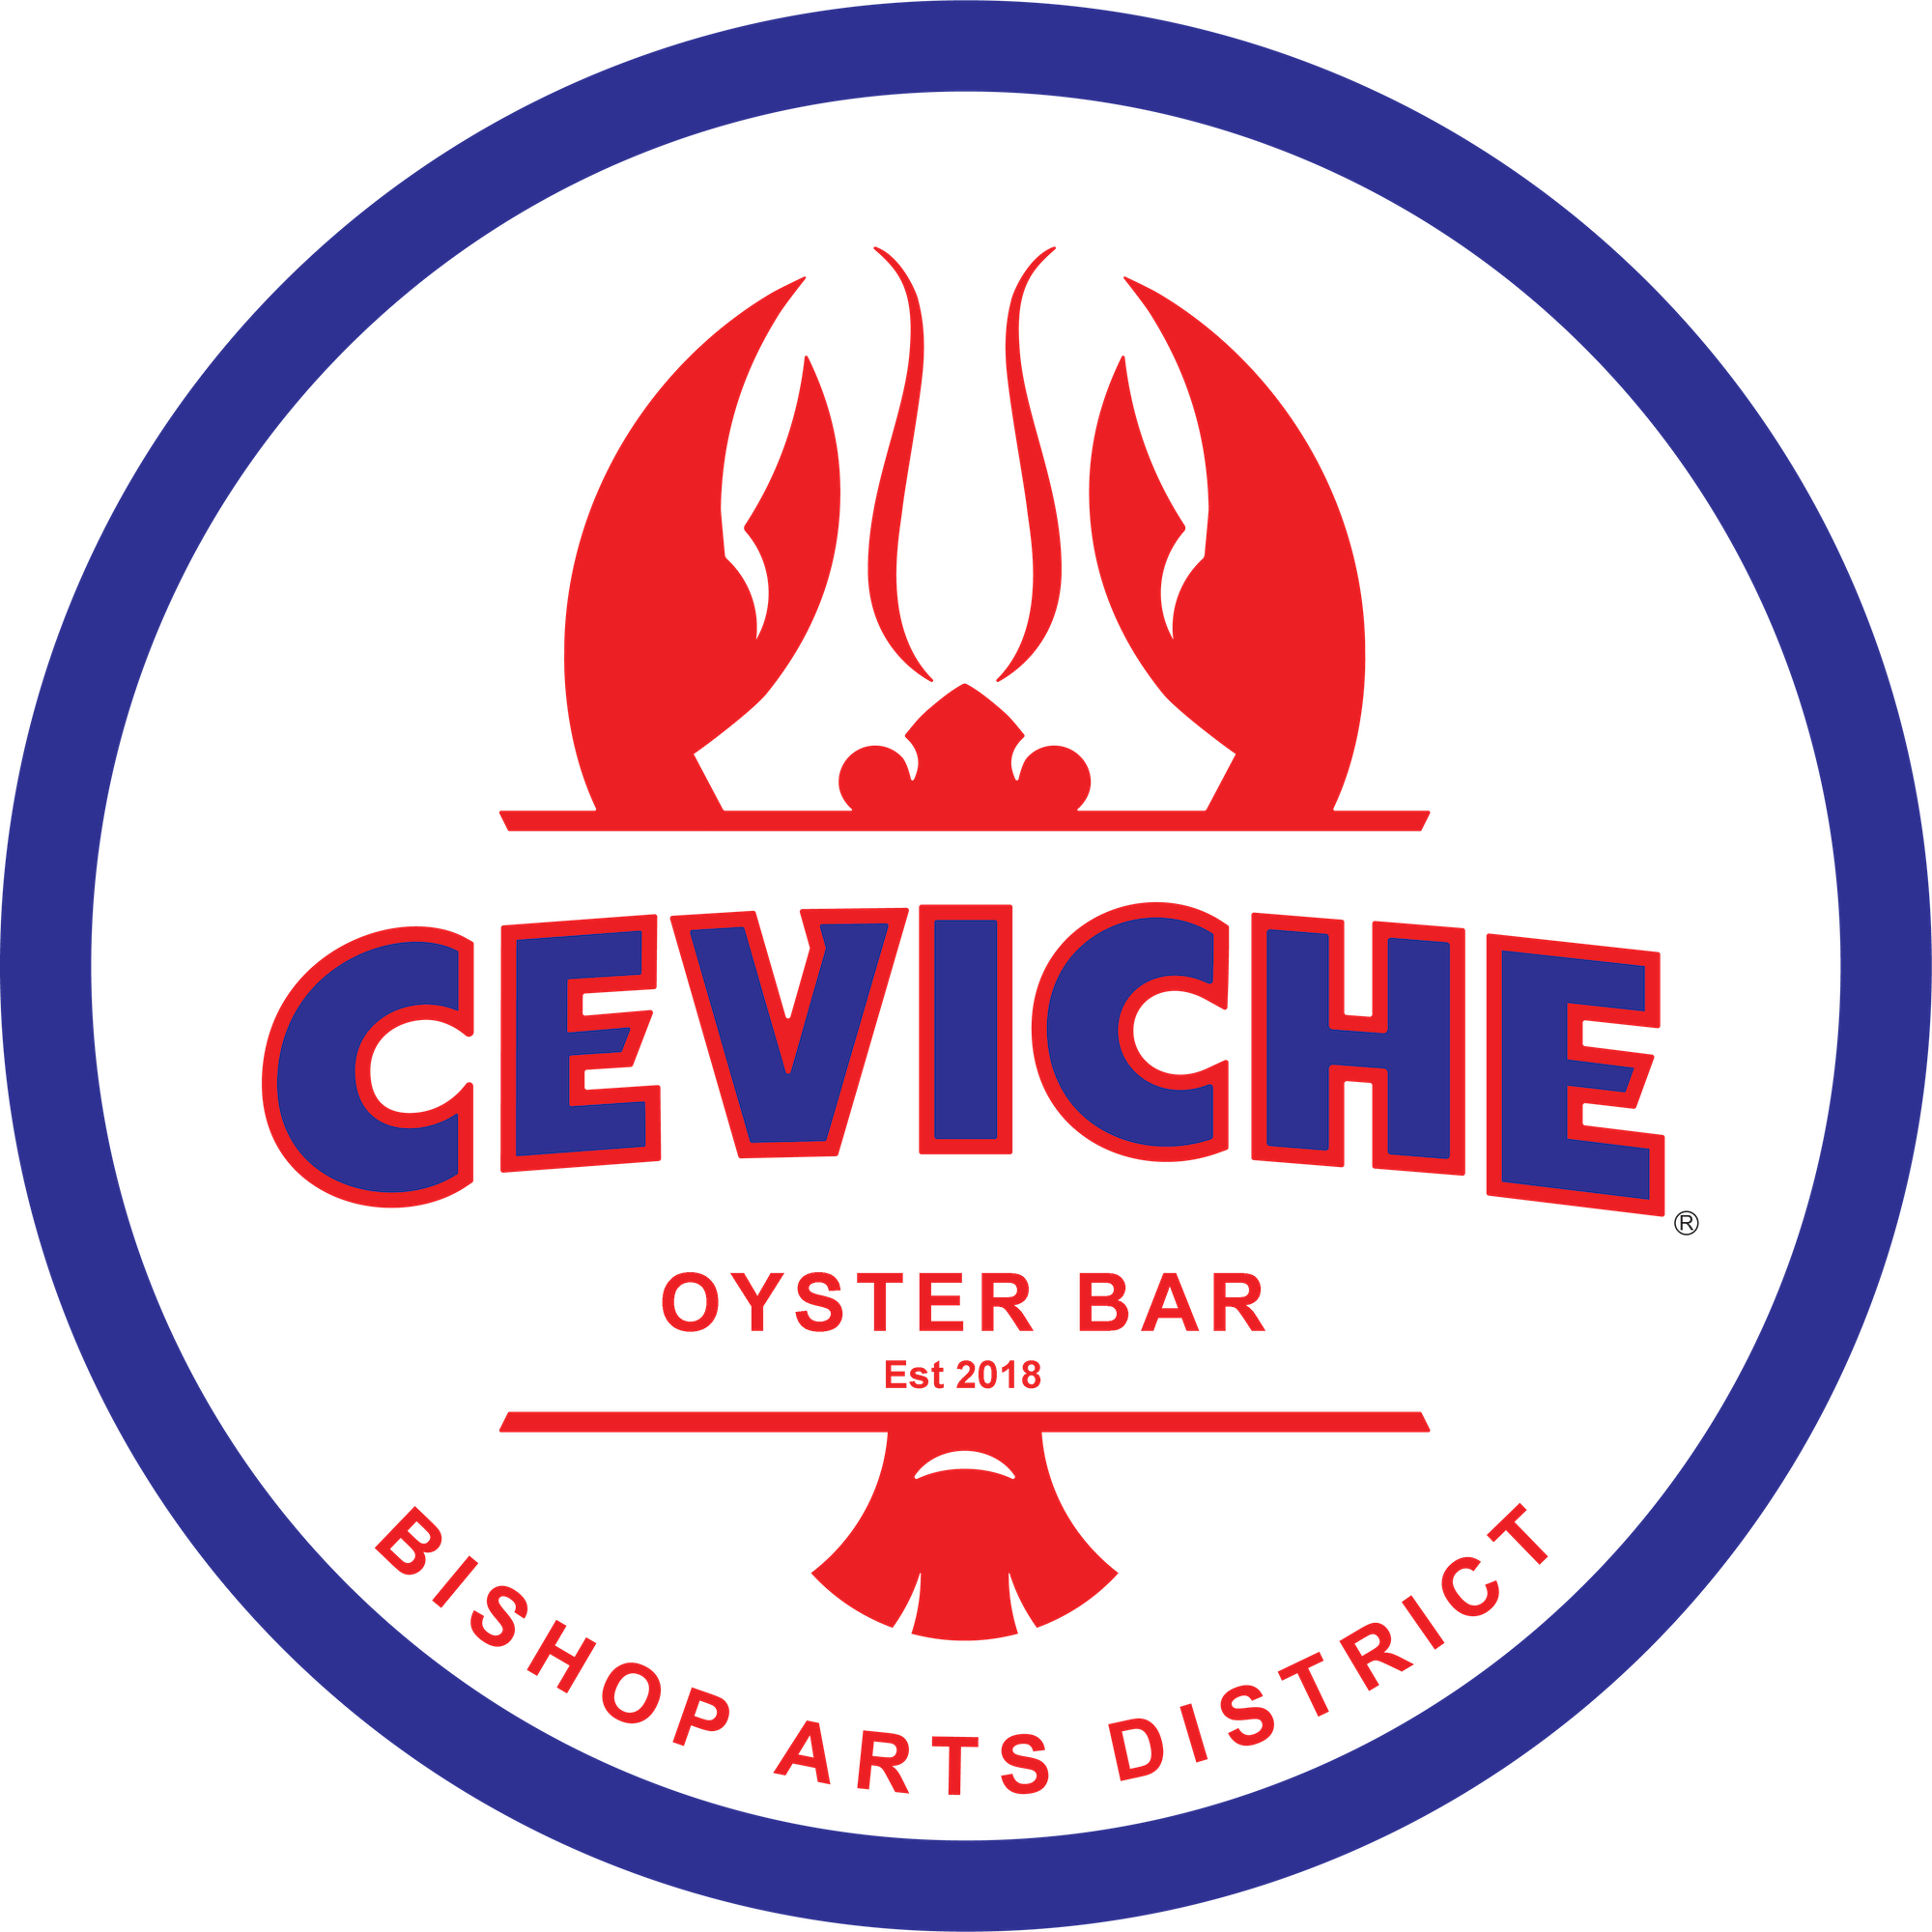 Ceviche Oyster Bar